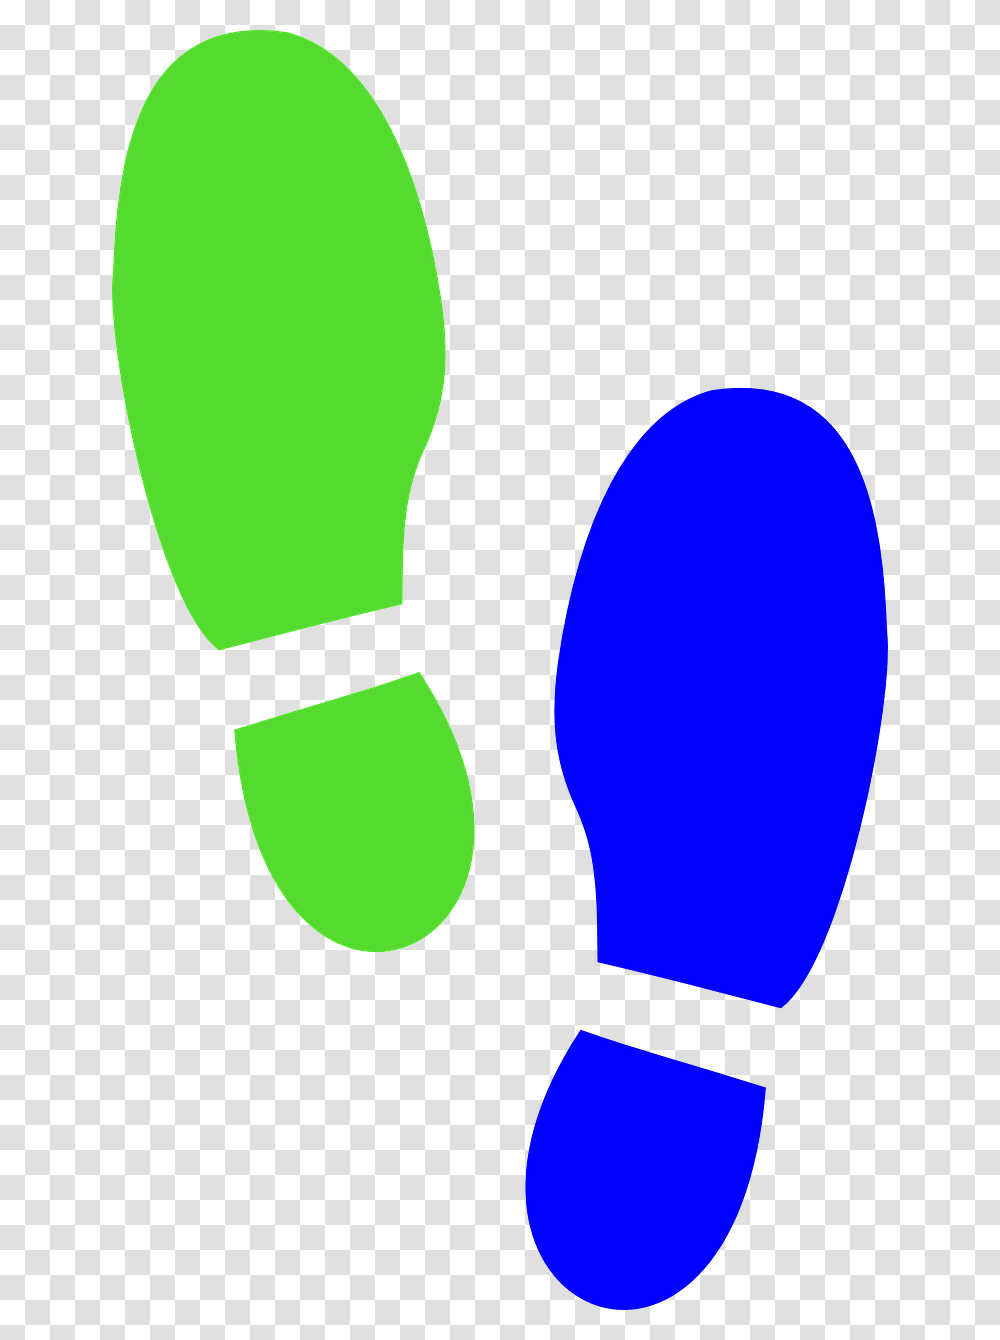 Shoe Print Blue Green Clip Art At Clipart Library Clip Art Shoe Prints, Light, Hand, Recycling Symbol Transparent Png